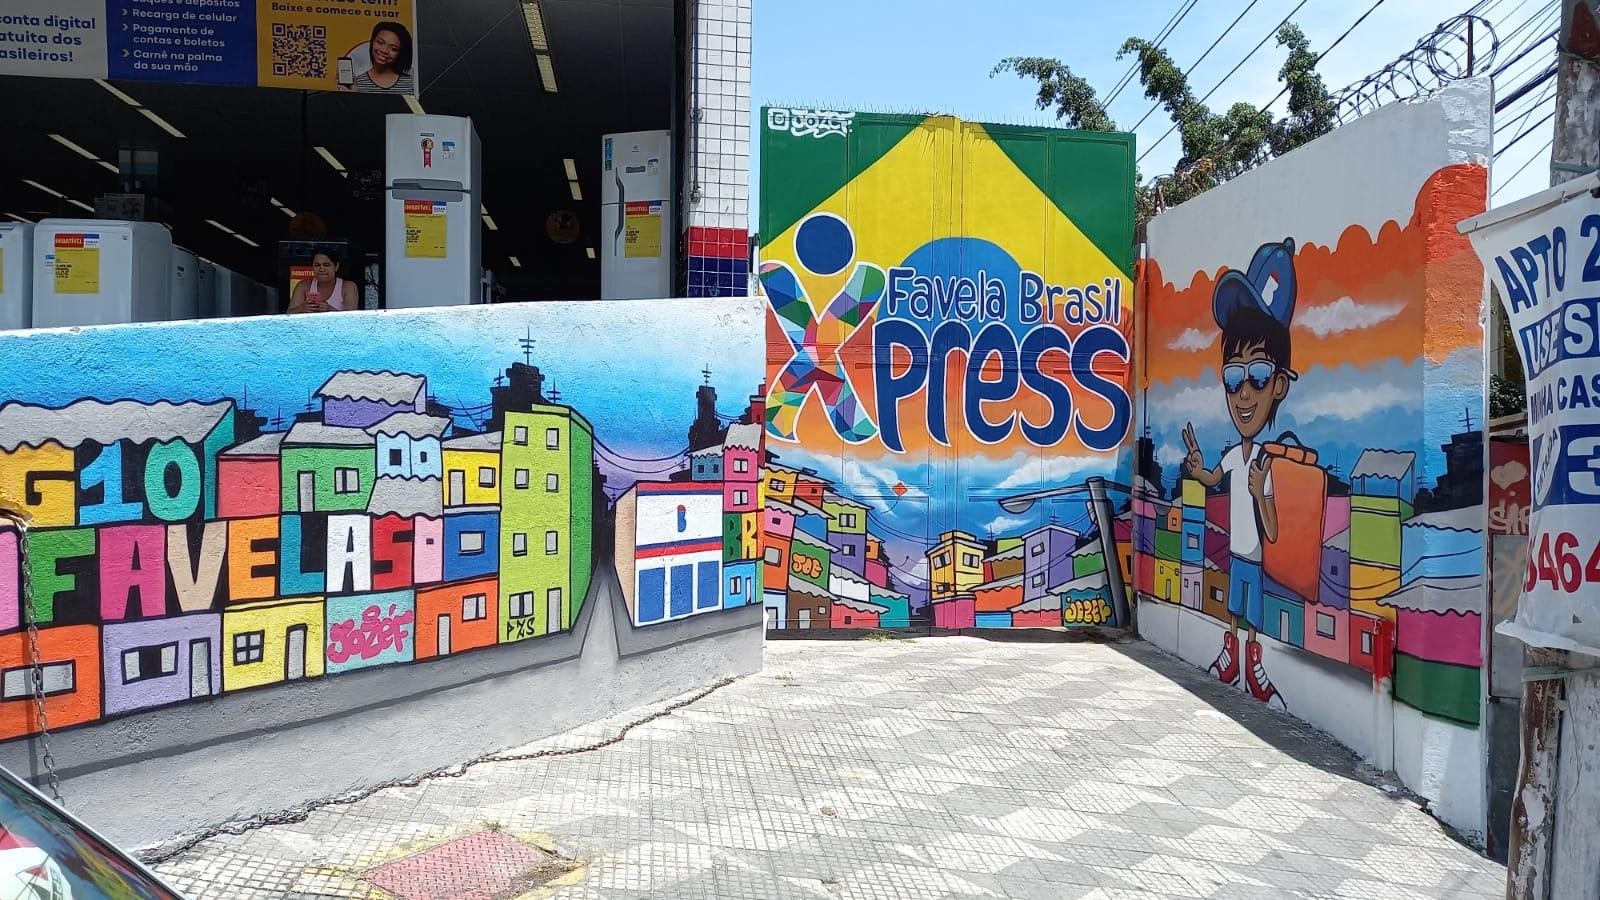 Casas Bahia e Favela Express